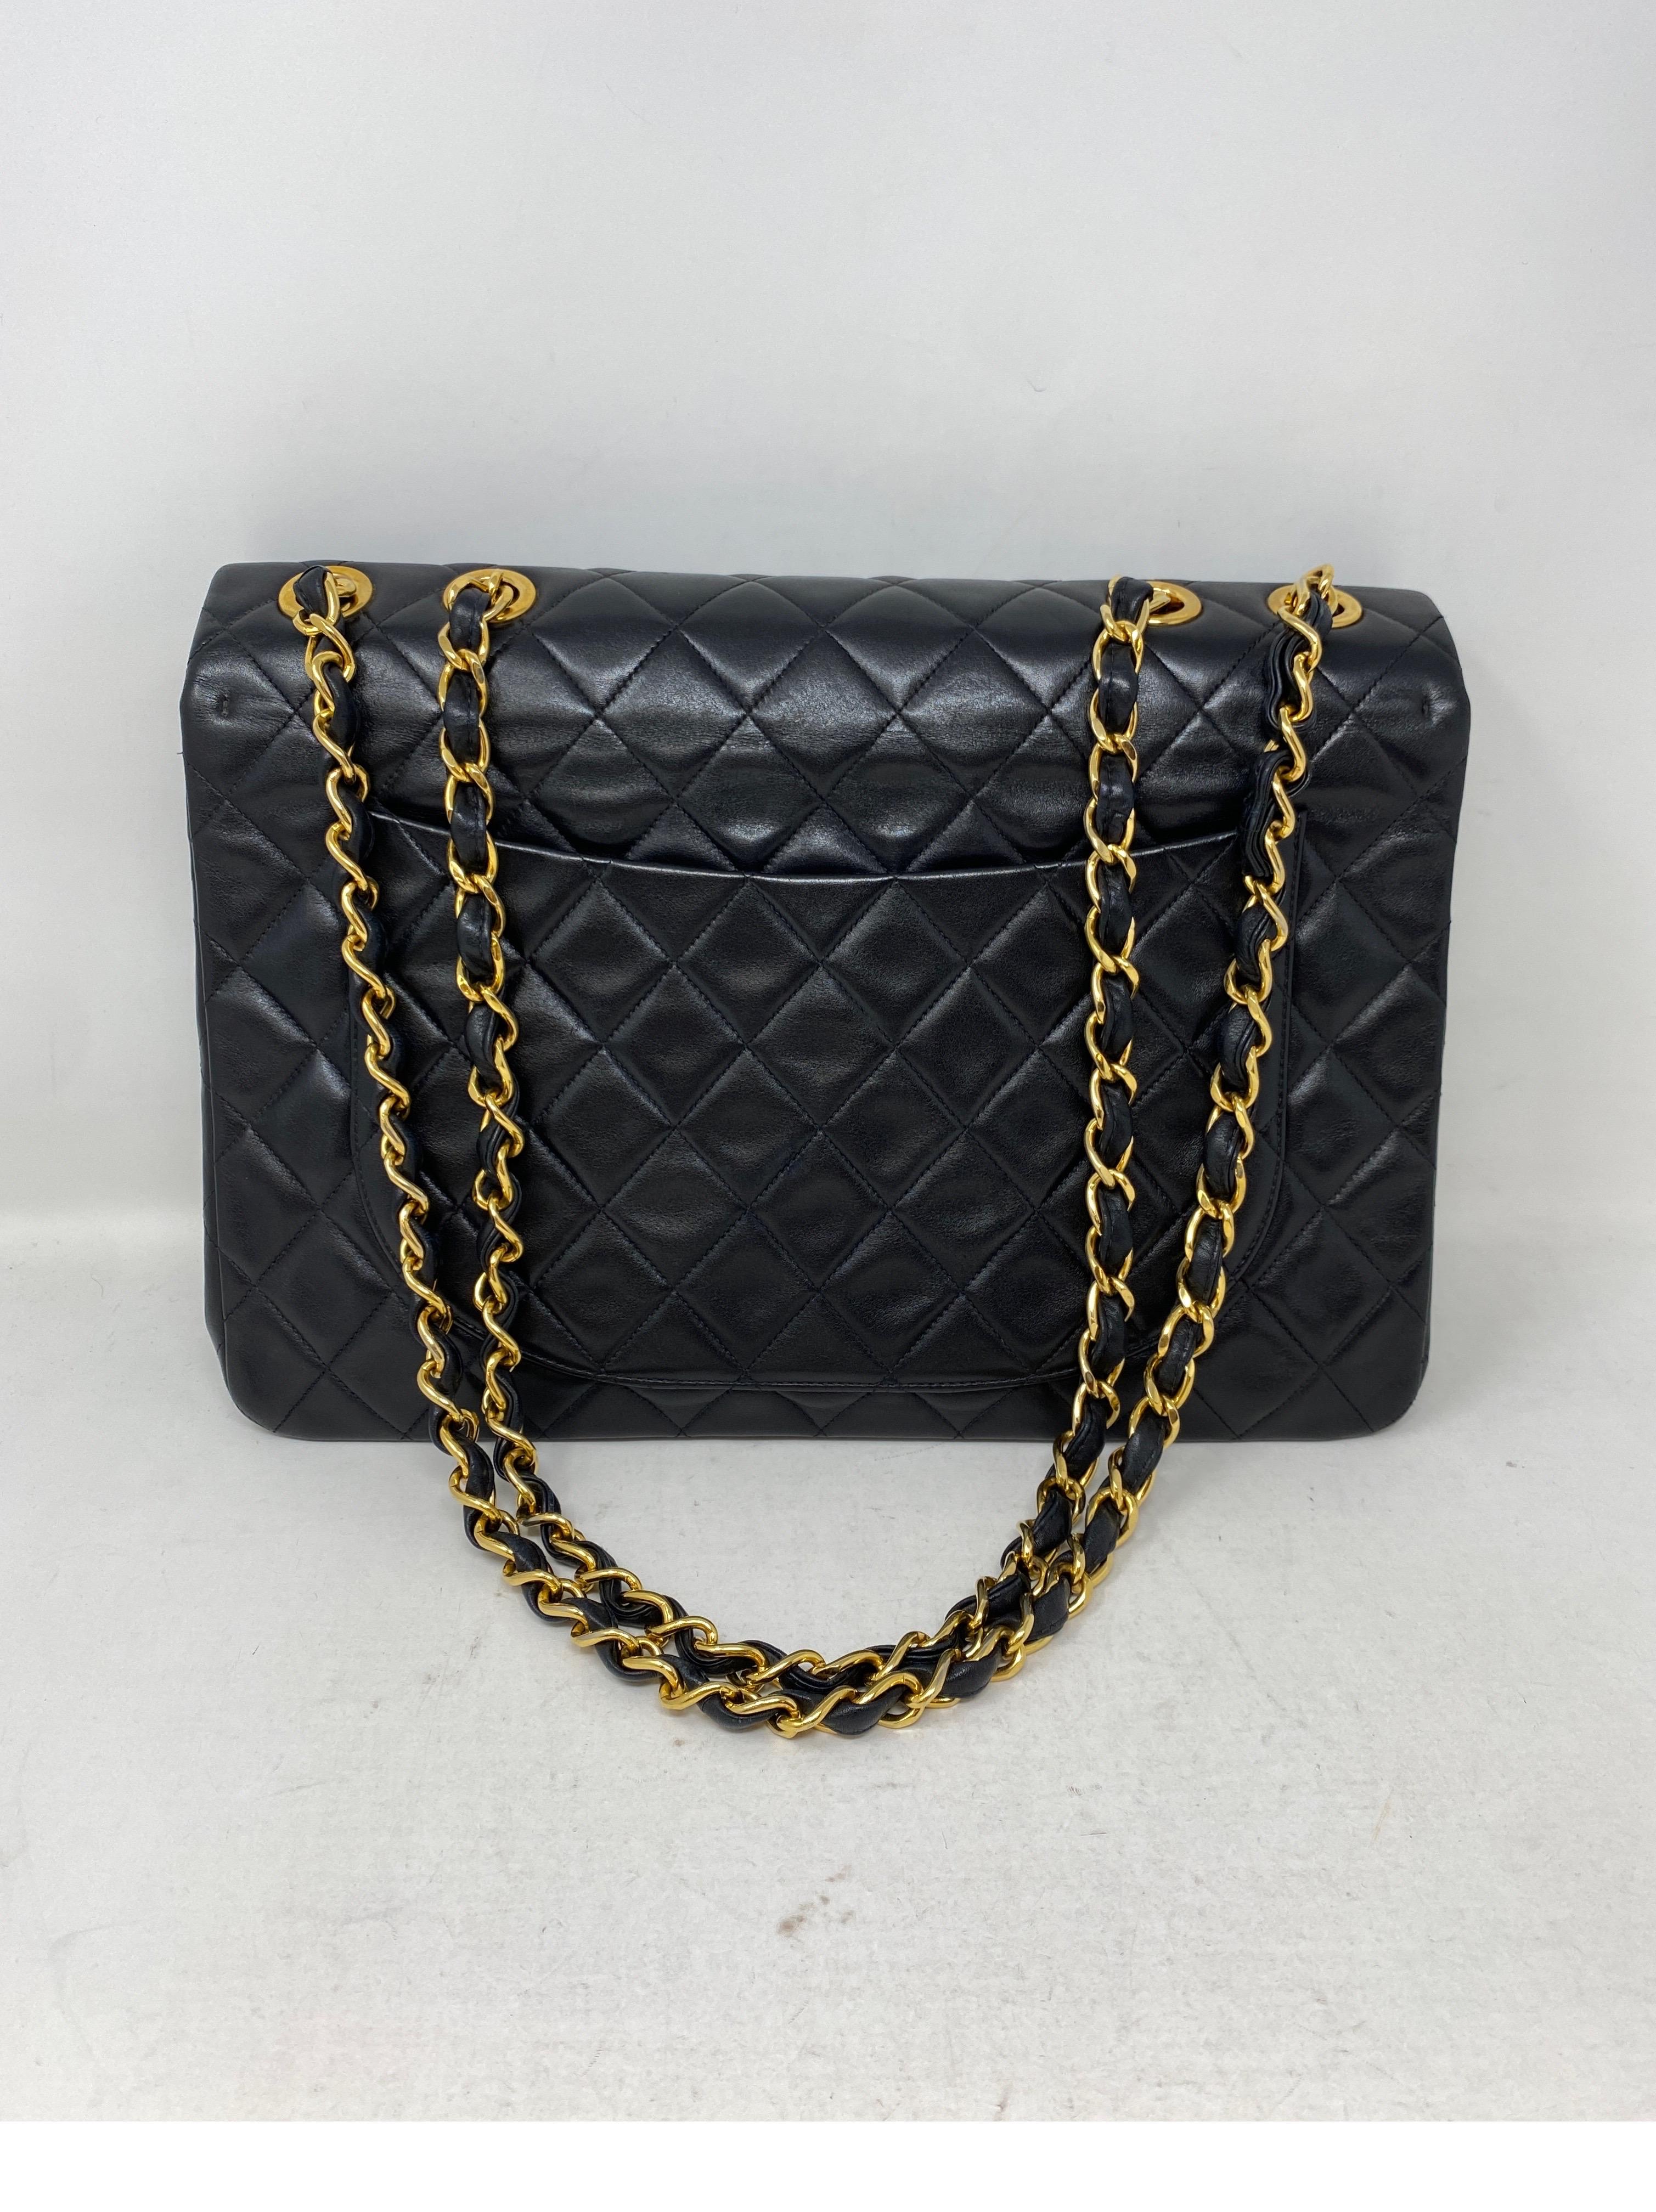 Women's or Men's Chanel Black Vintage Maxi Bag 